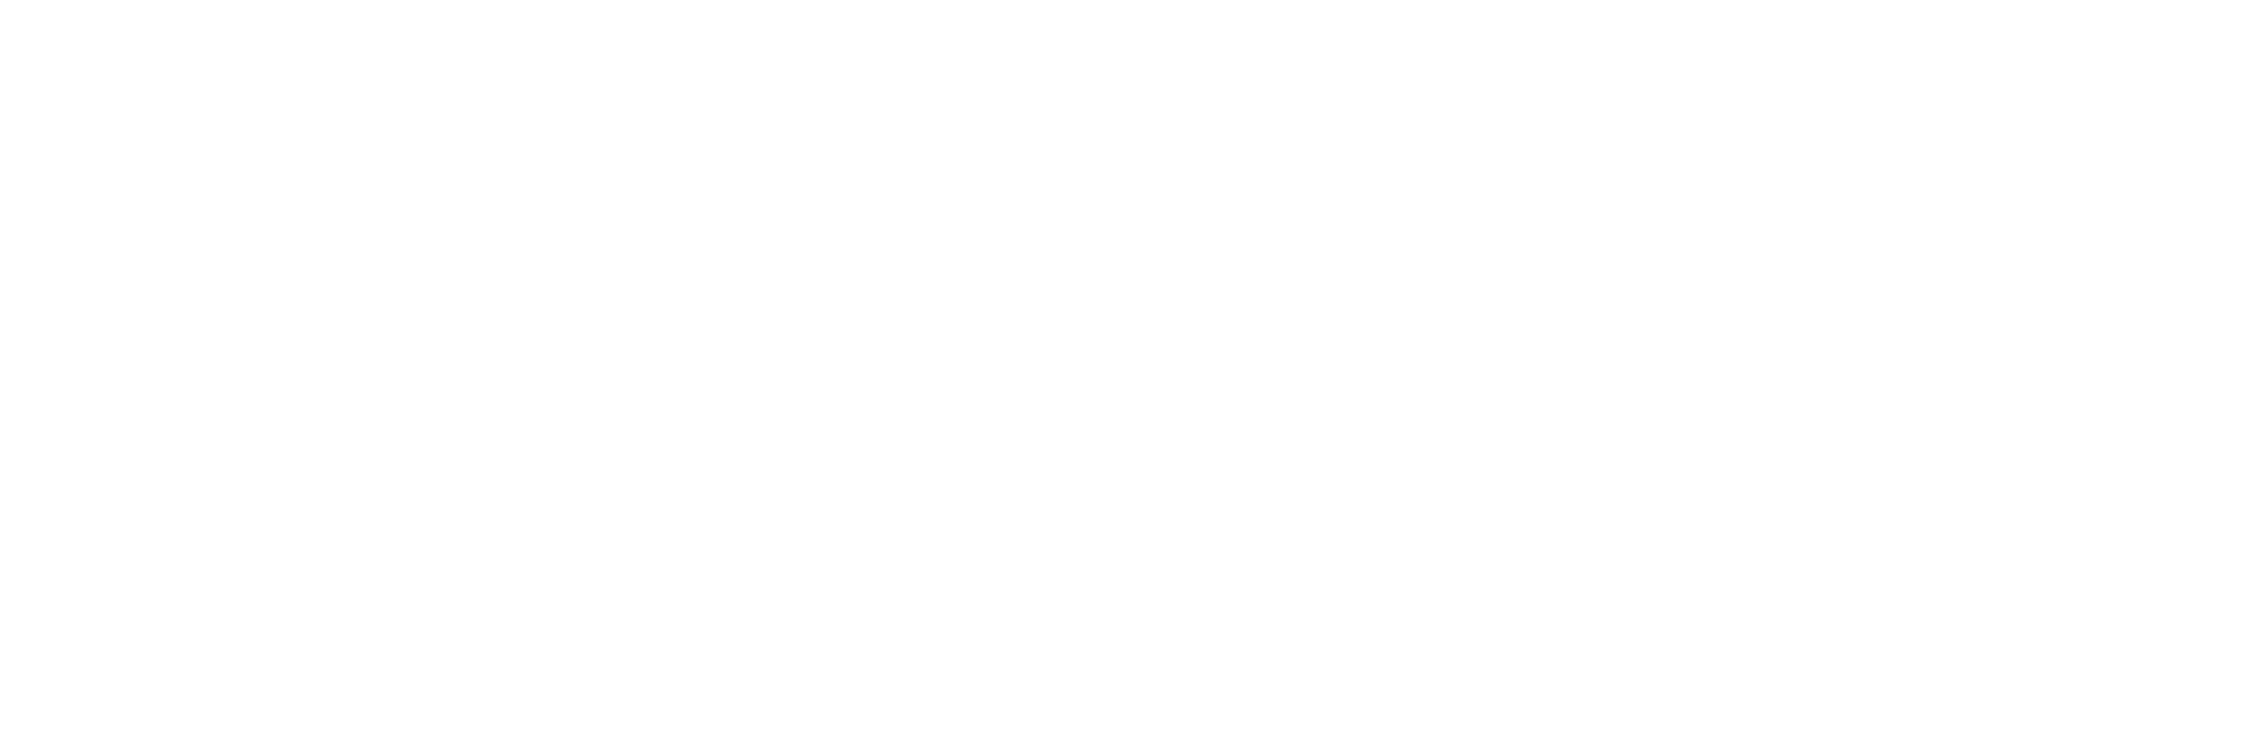 eSecurity Planet Logo